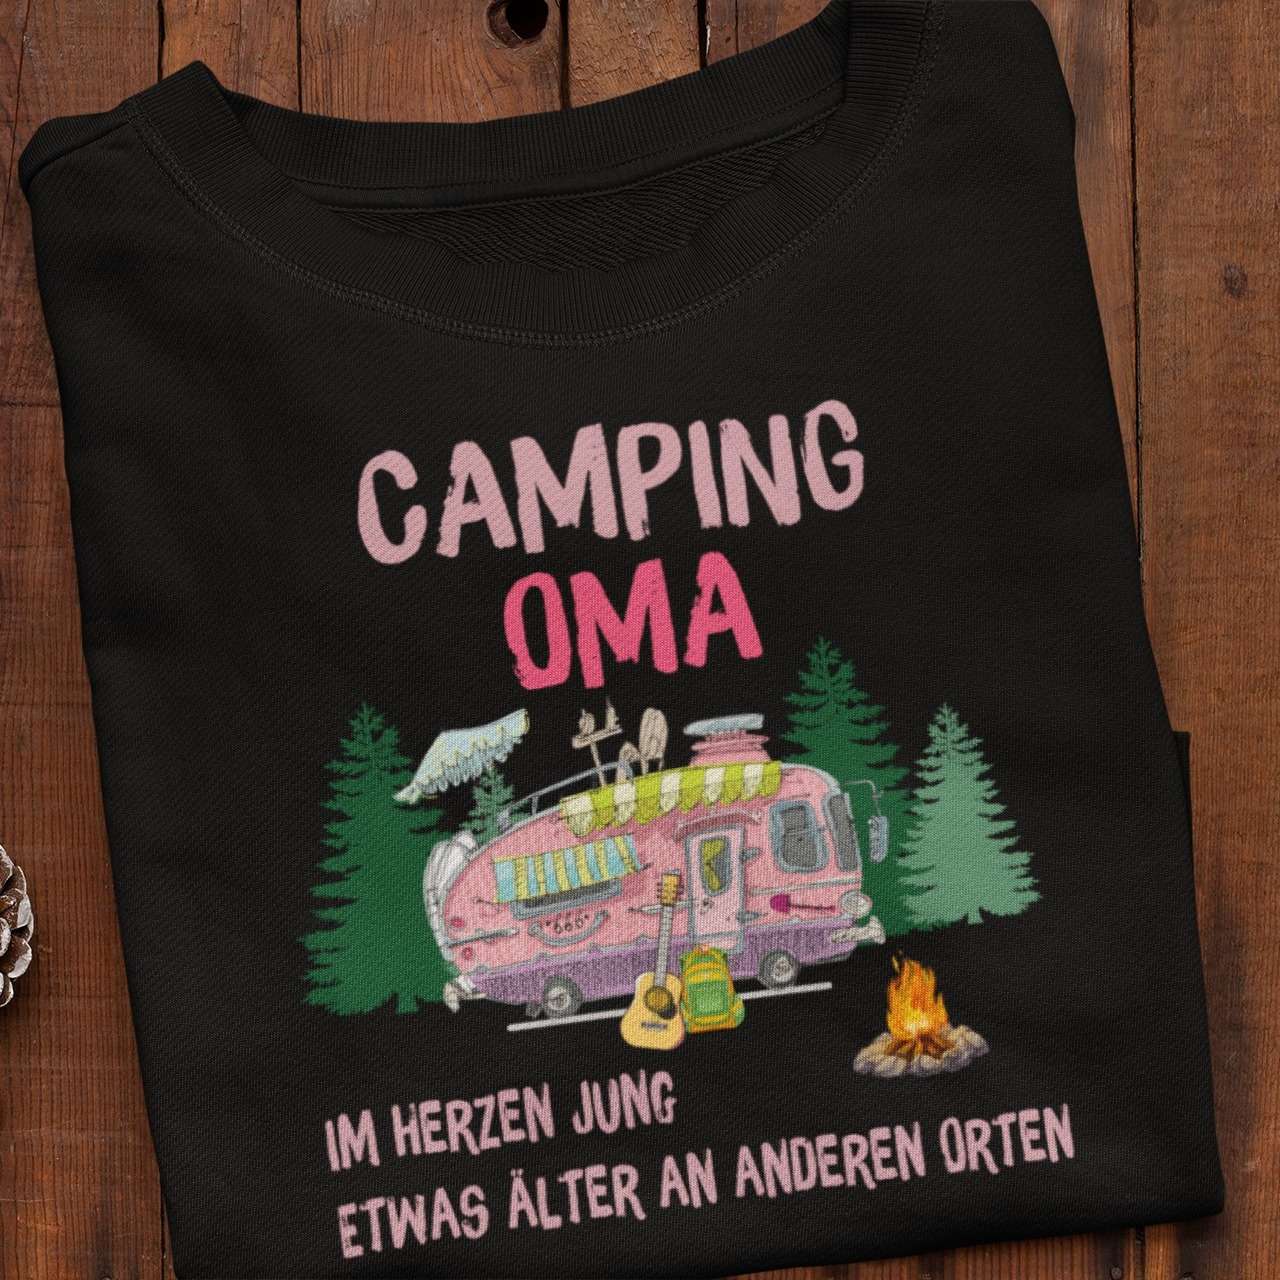 Camping Grandma, Gift for camper - Camping oma im herzen jung etwas alter an anderen orten